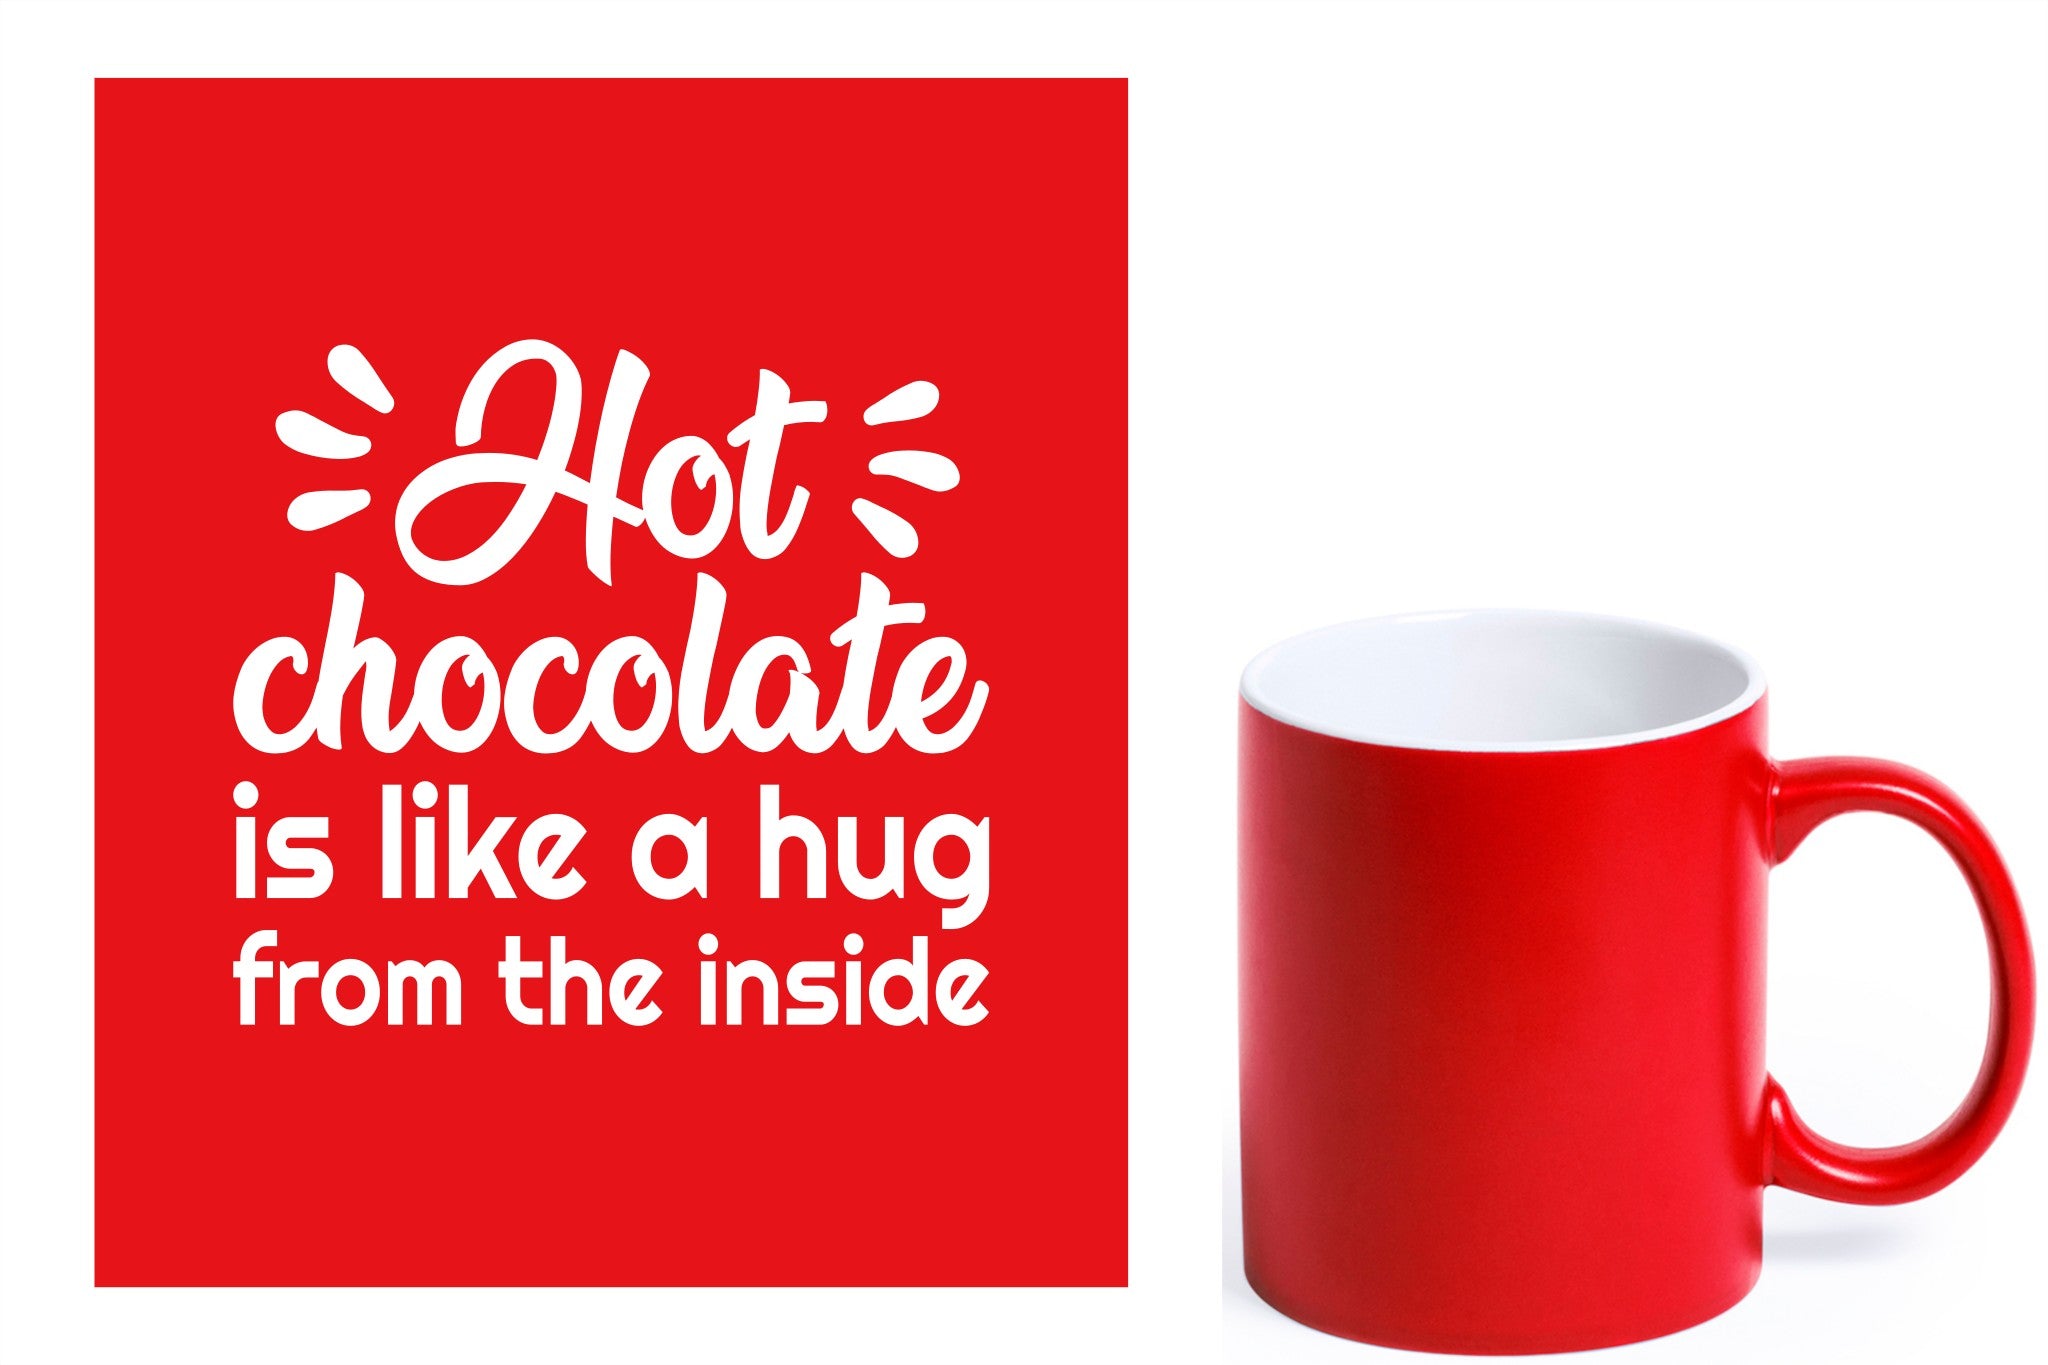 rode keramische mok met witte gravure  'Hot chocolate is like a hug from the inside'.